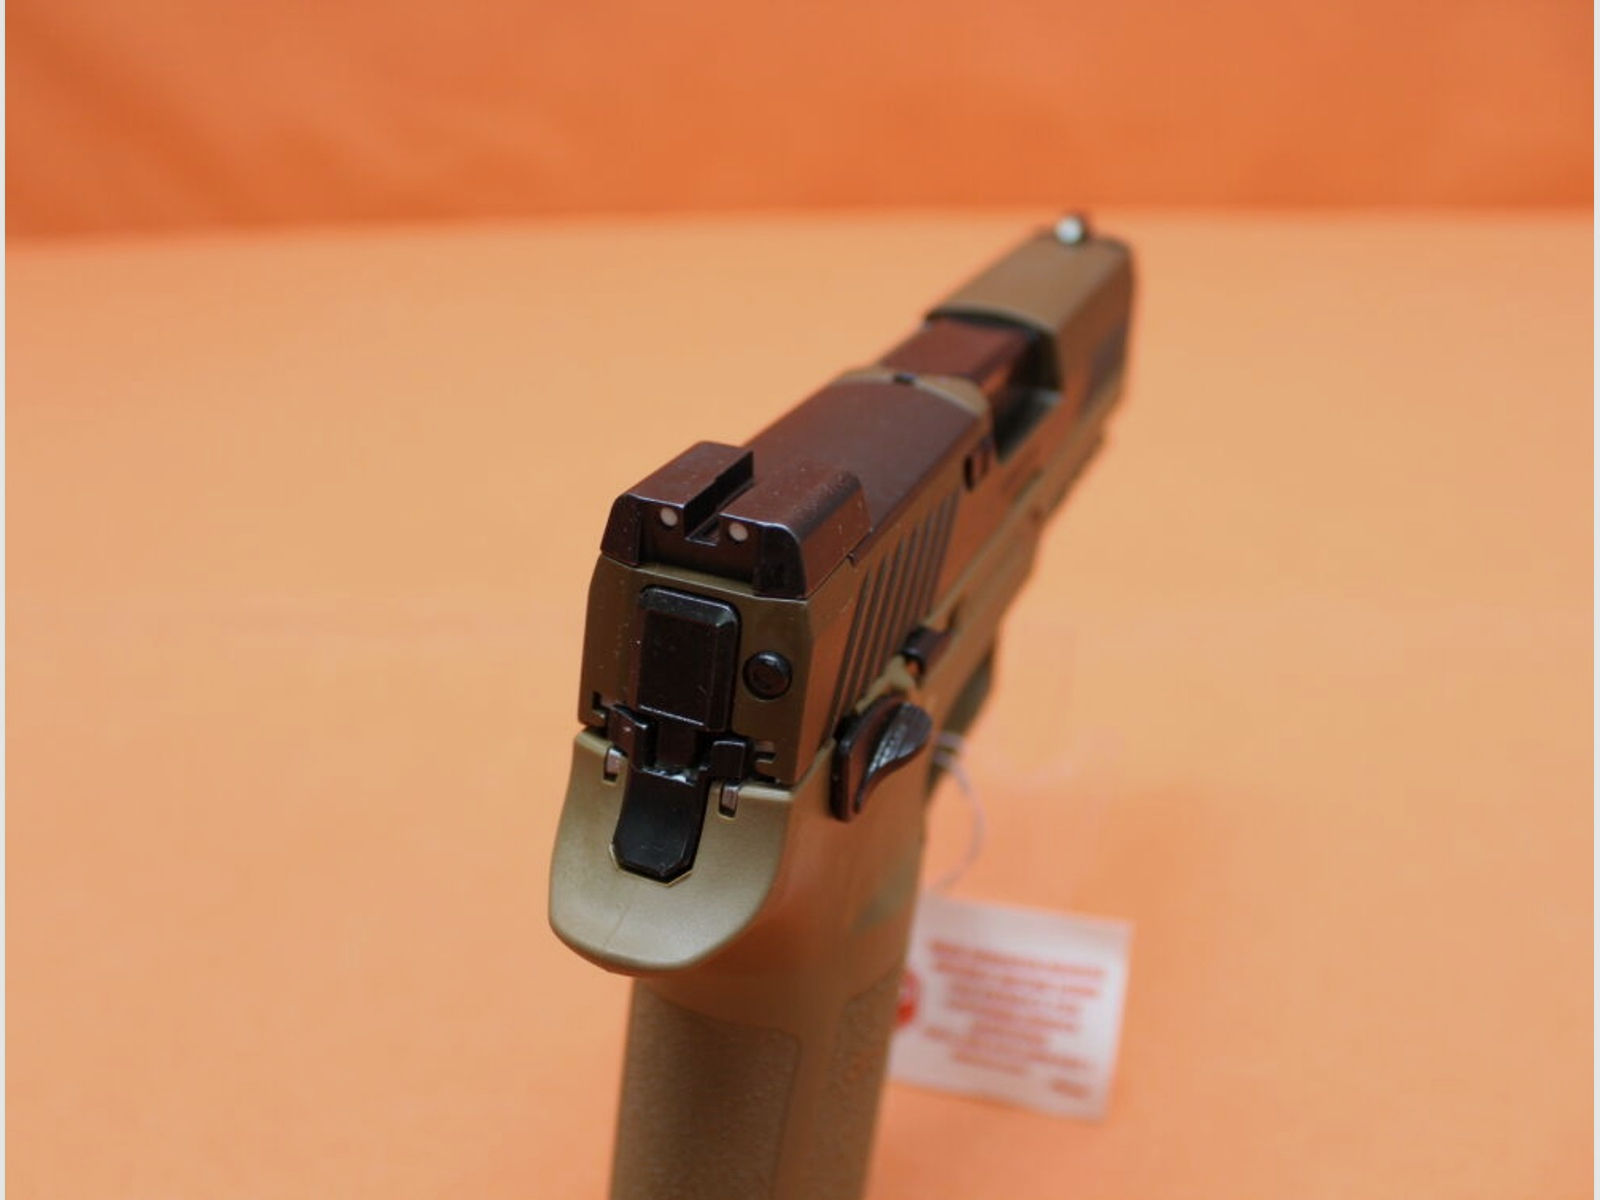 SIG Sauer	 Ha.Pistole 9mmLuger SIG Sauer P320 M18 99mm Lauf Coyote Tan/ OR Optic Ready 9mmPara/9x19